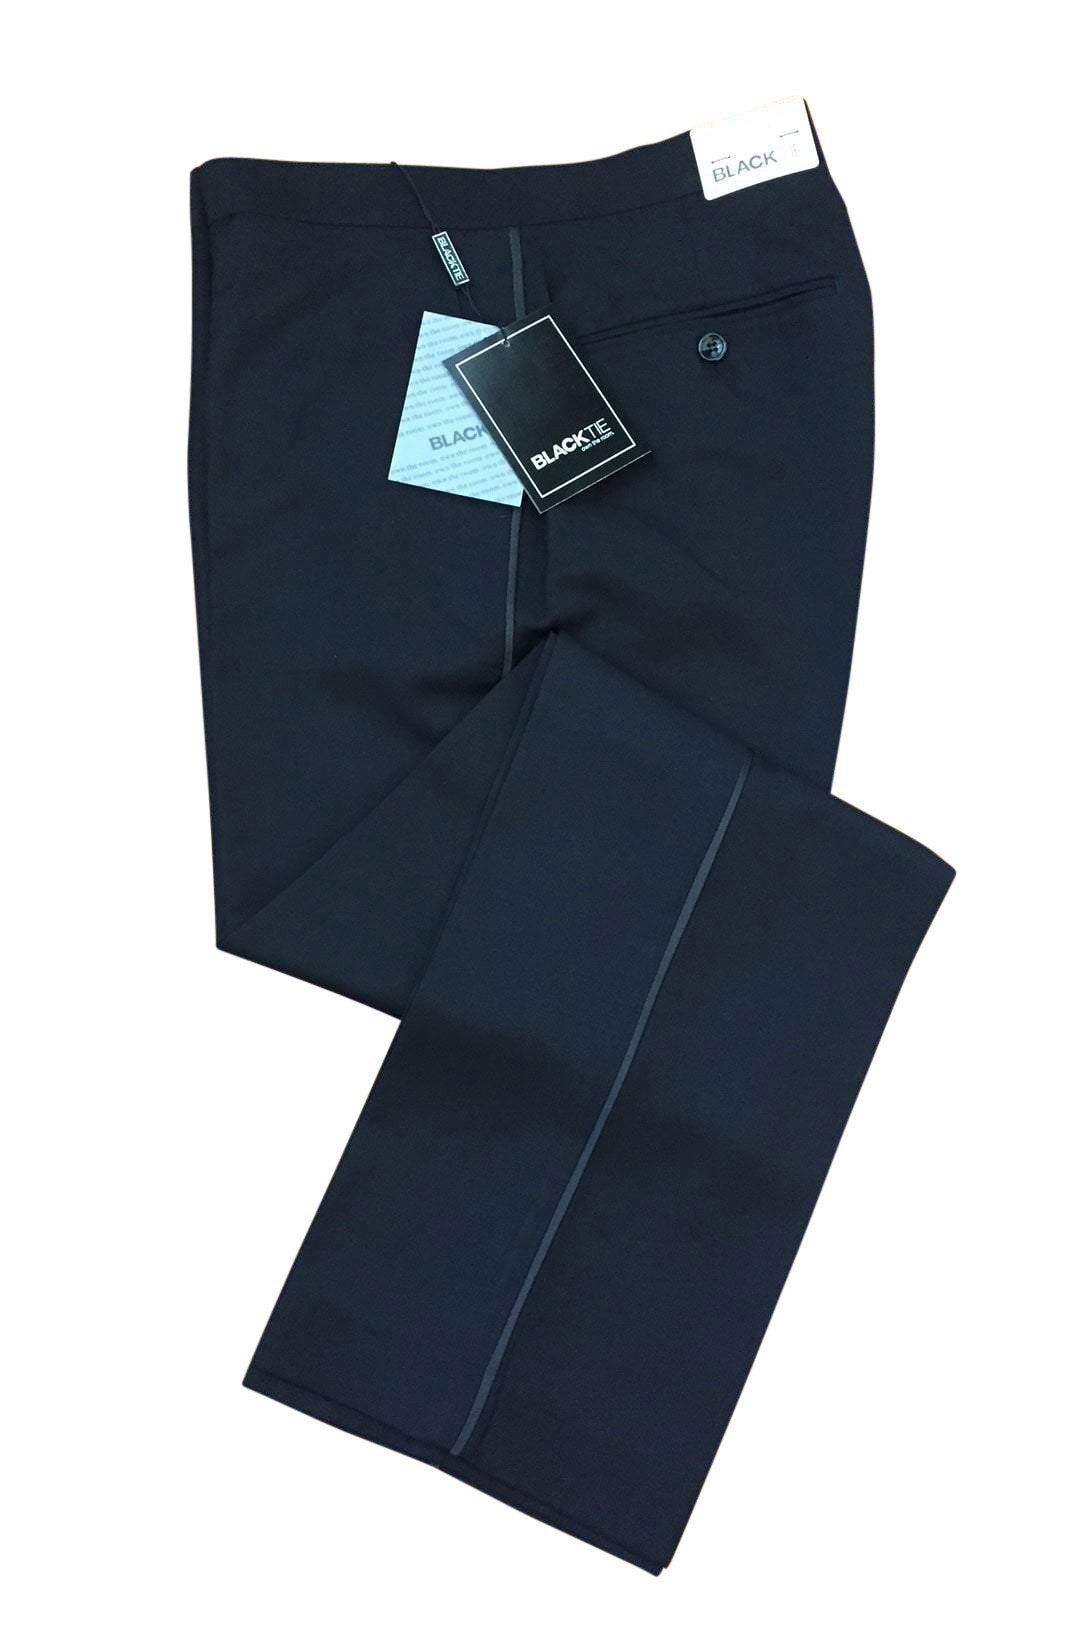 Logan Black Luxury Wool Blend Tuxedo Pants - Unhemmed - 28 /